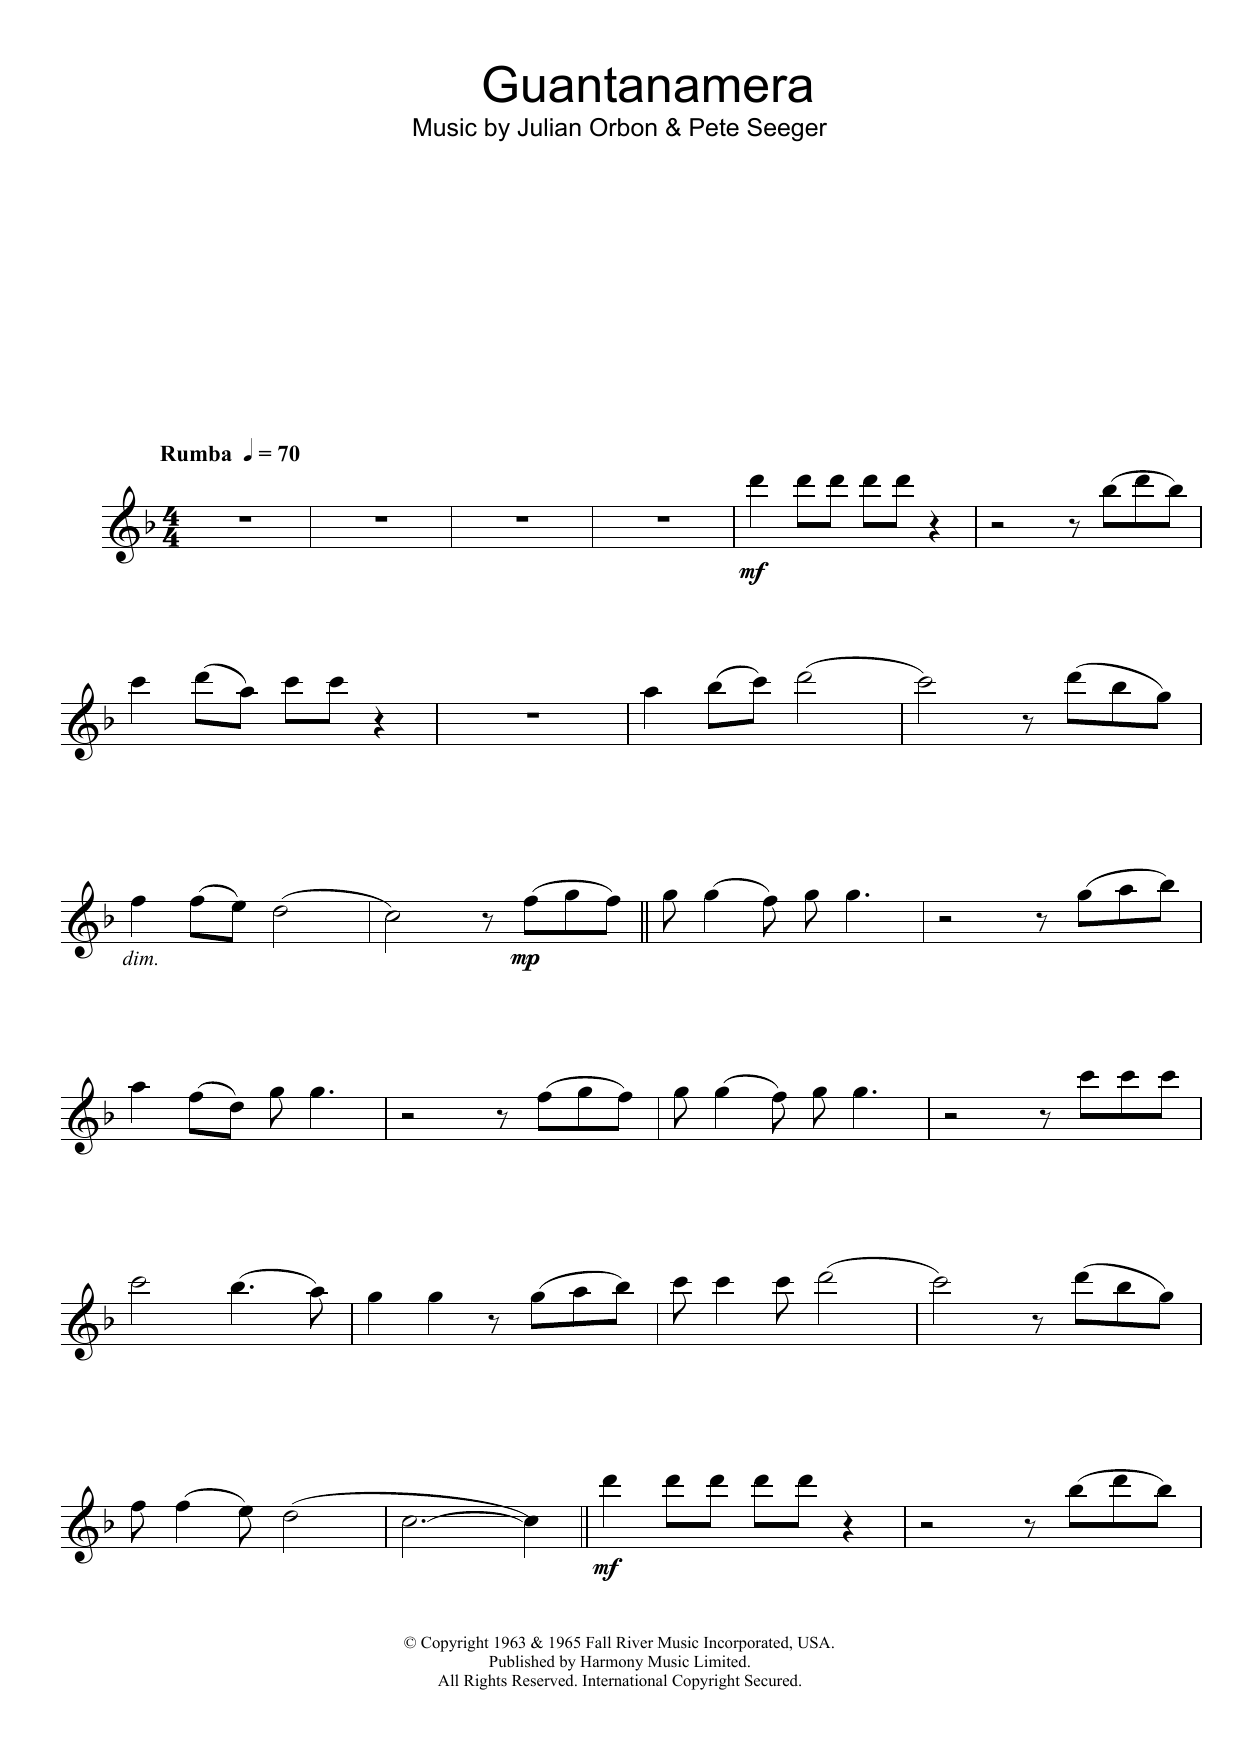 Julian Orbon Guantanamera Sheet Music Notes & Chords for Flute - Download or Print PDF